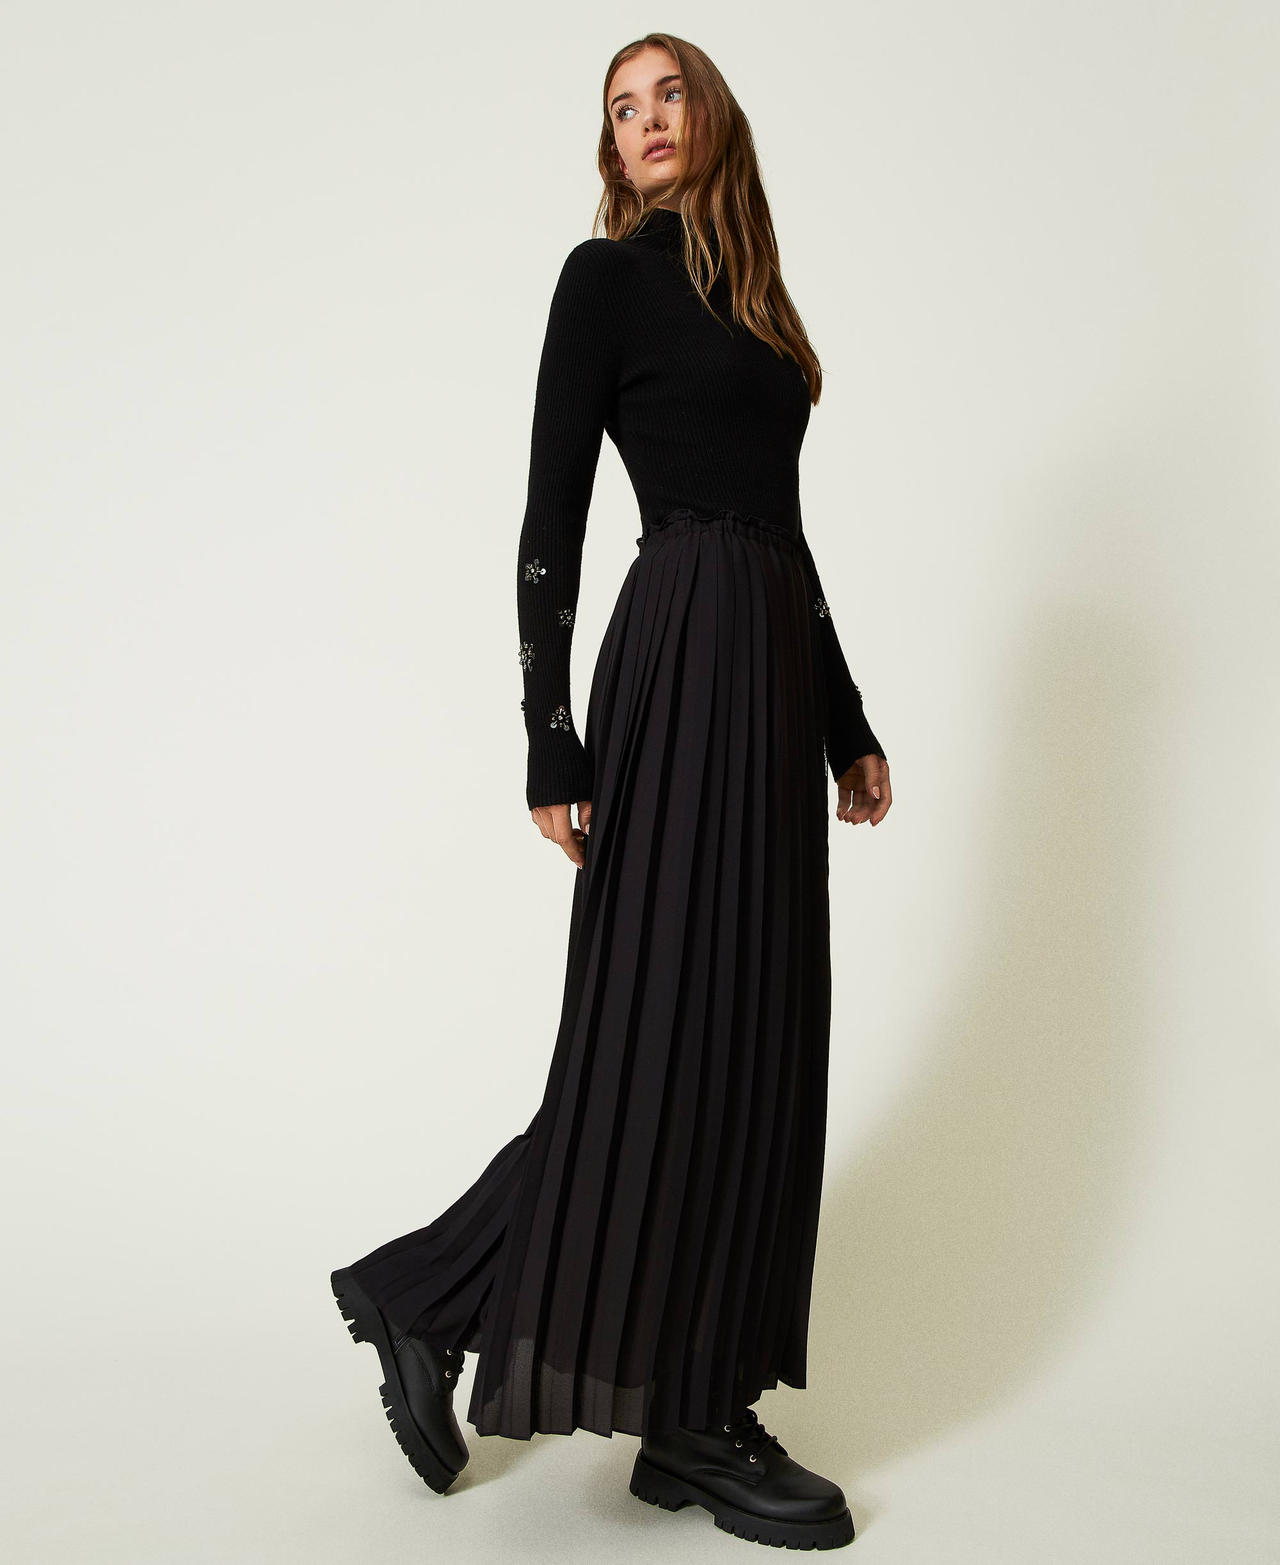 Falda larga plisada con encaje Bicolor Negro / Vainilla Mujer 232LI2RBB-02